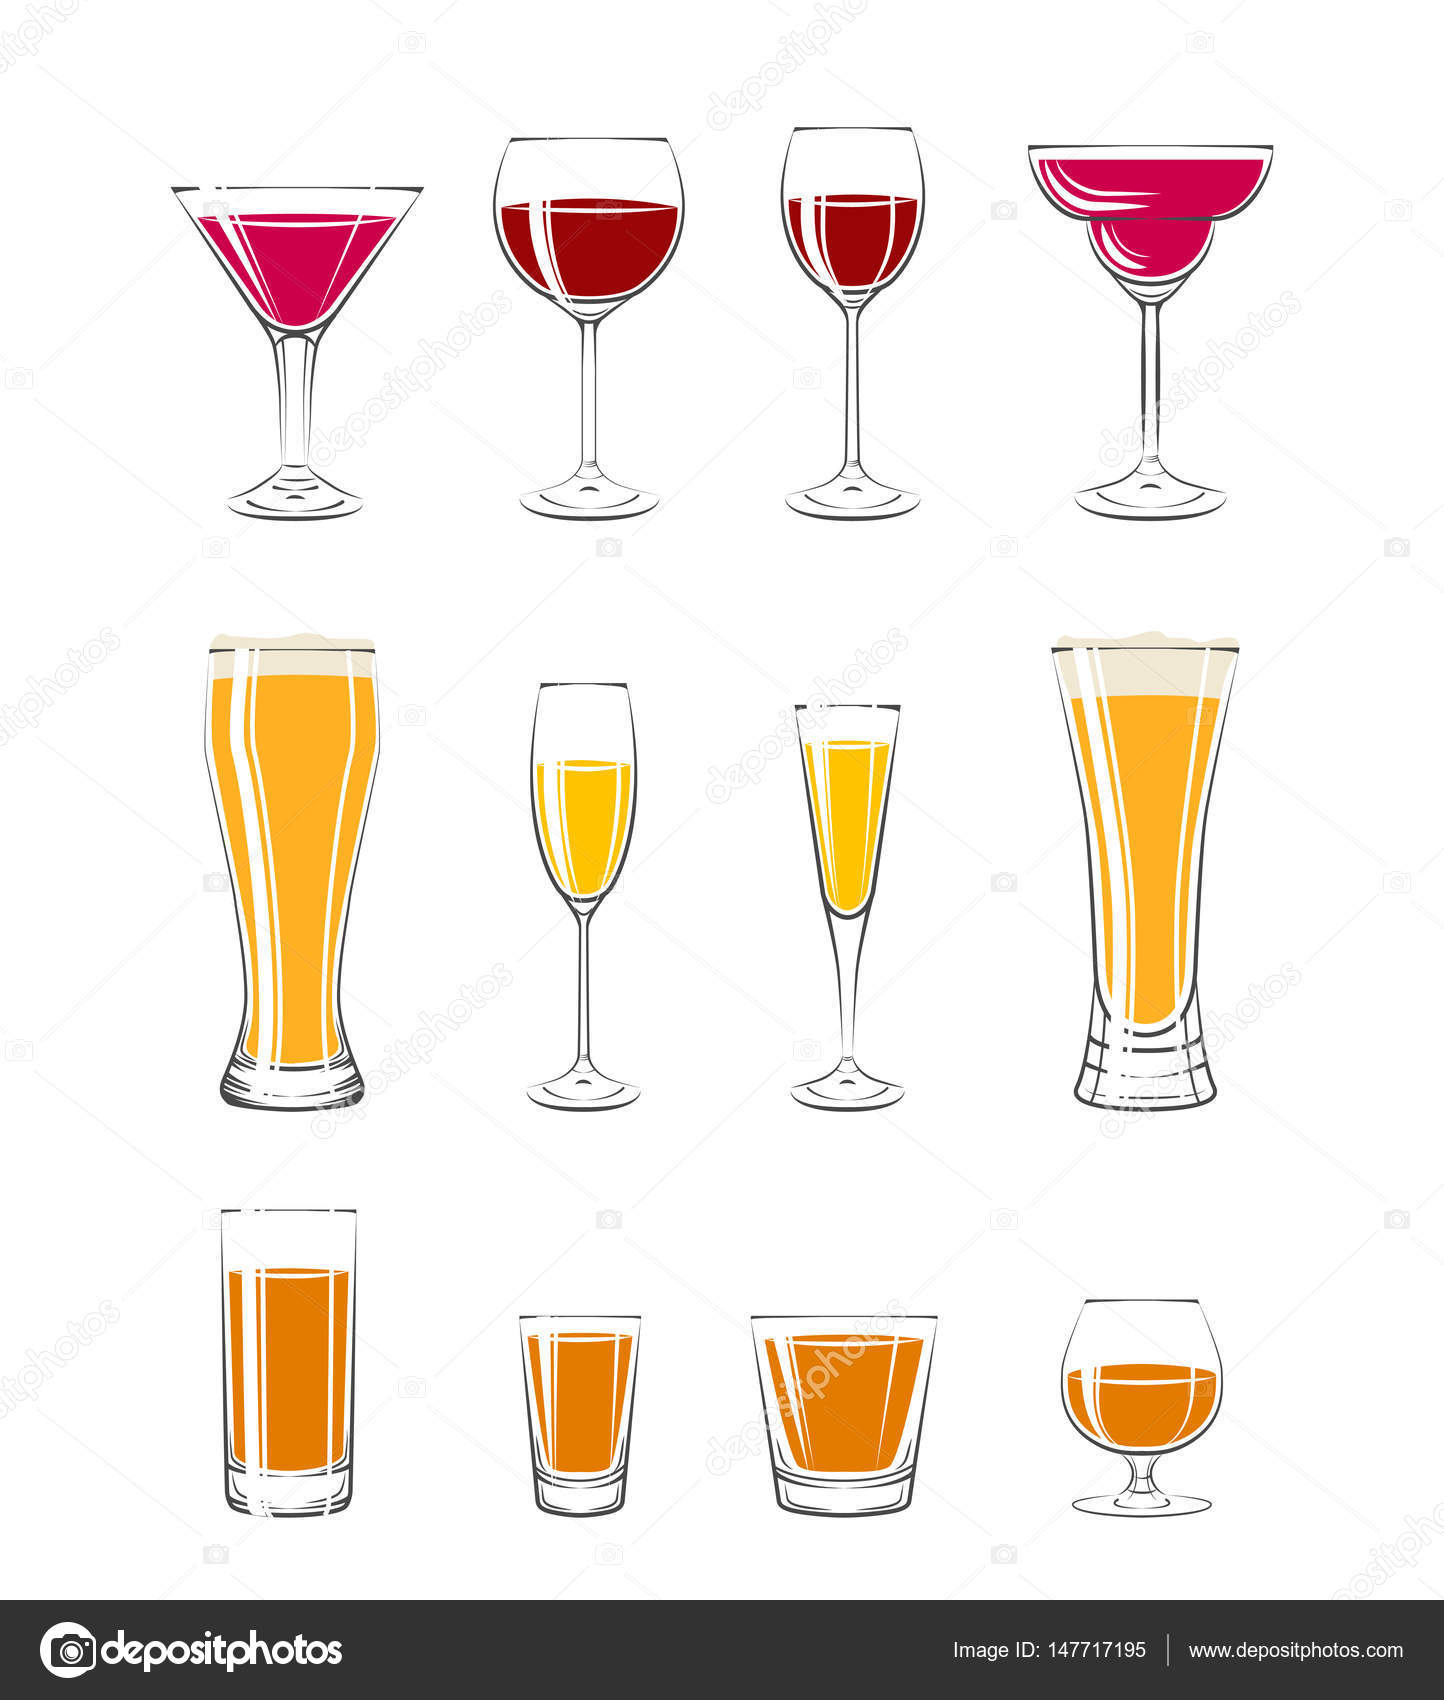 https://st3.depositphotos.com/2863223/14771/v/1600/depositphotos_147717195-stock-illustration-set-of-alcohol-glasses.jpg